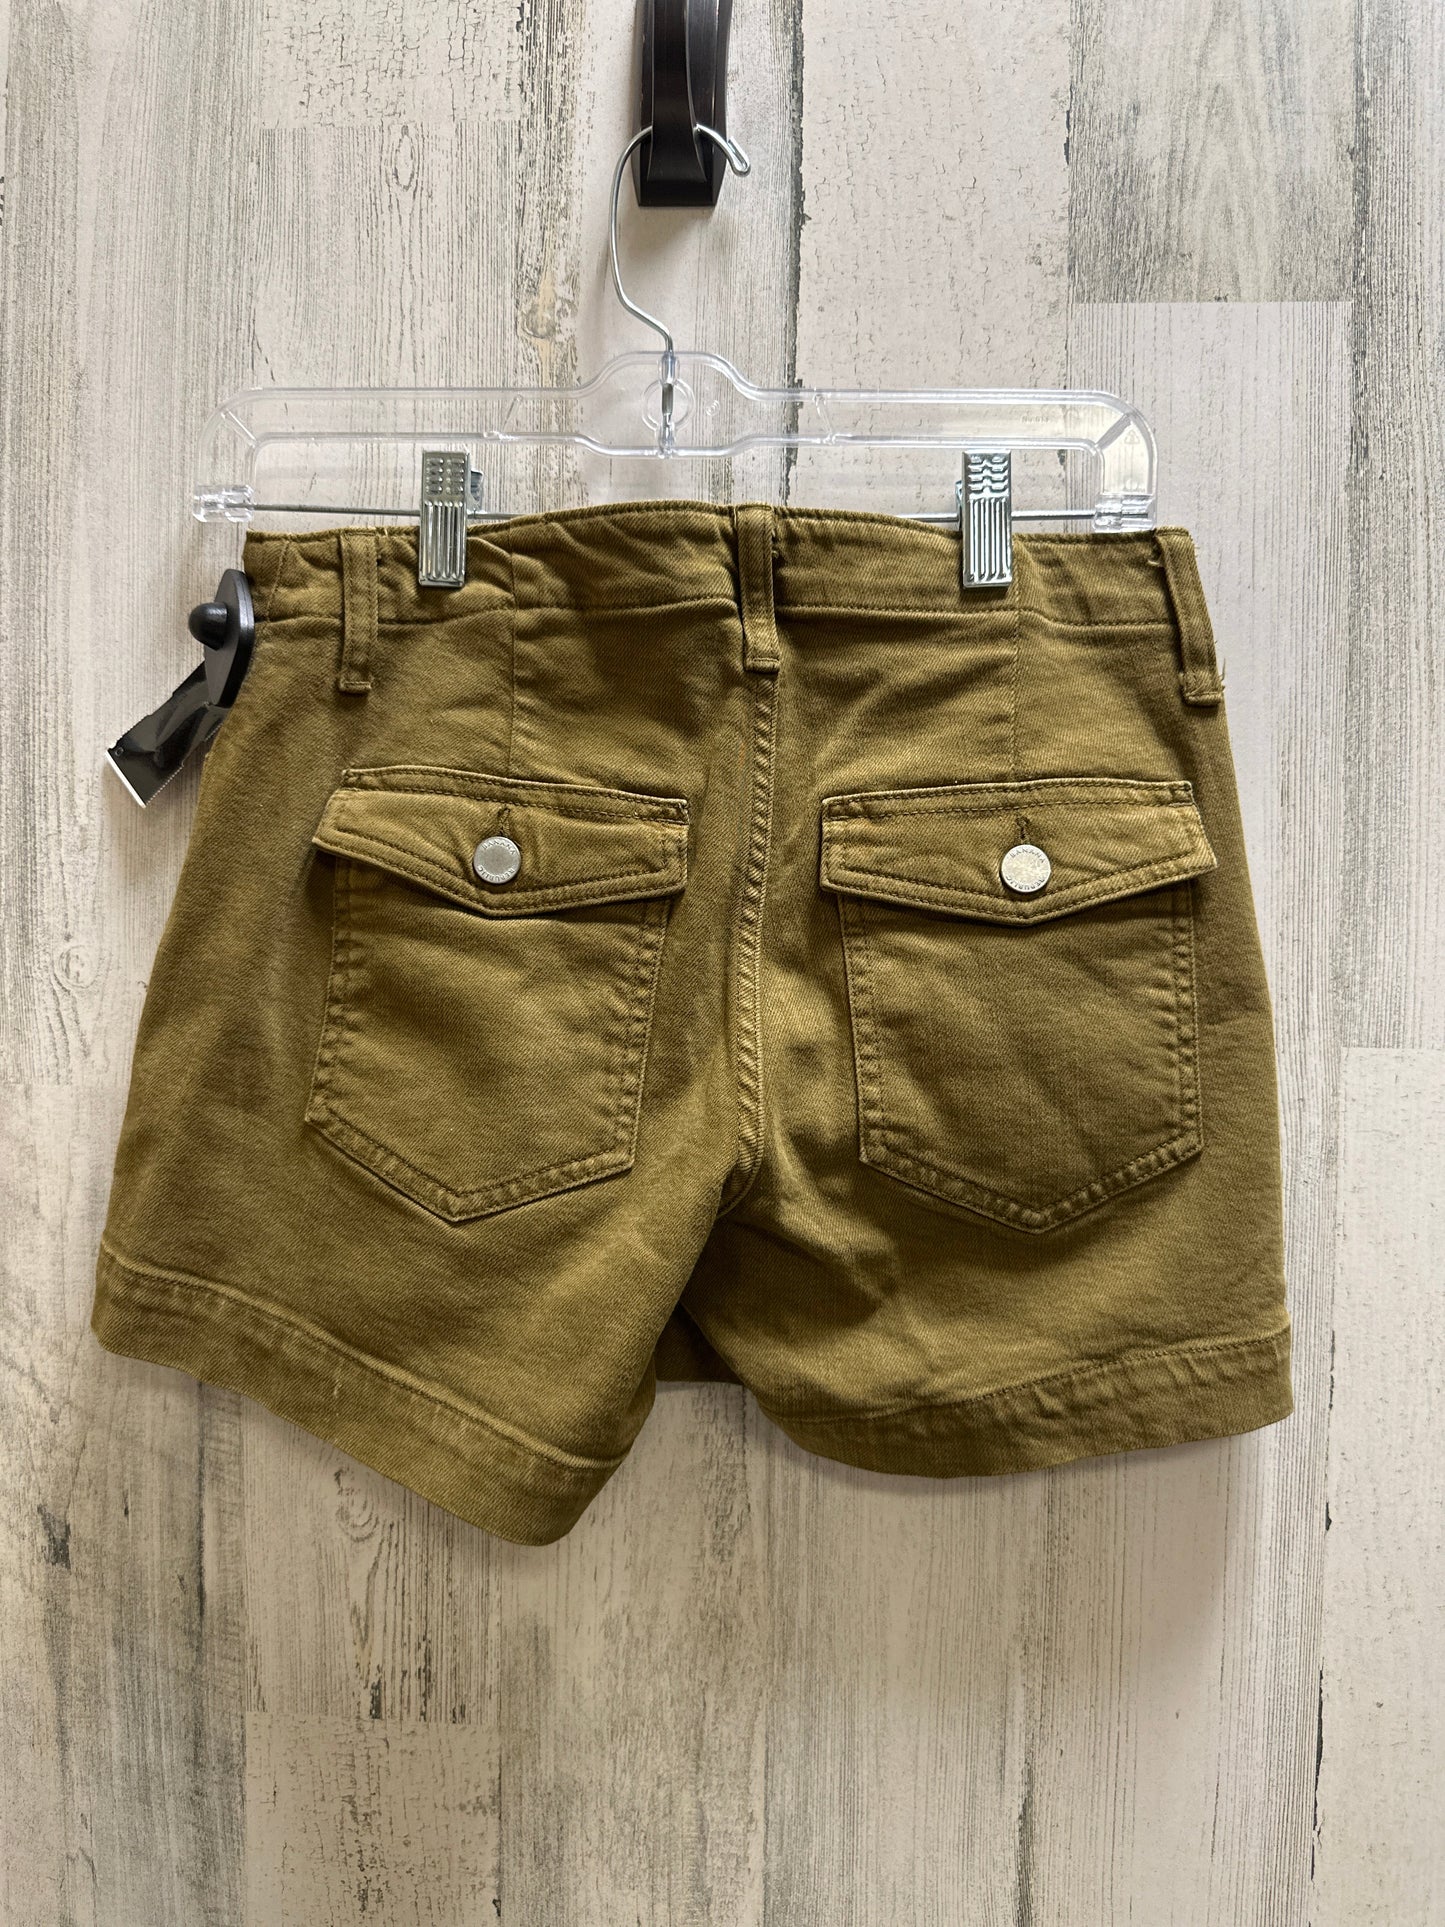 Green Shorts Banana Republic, Size 0